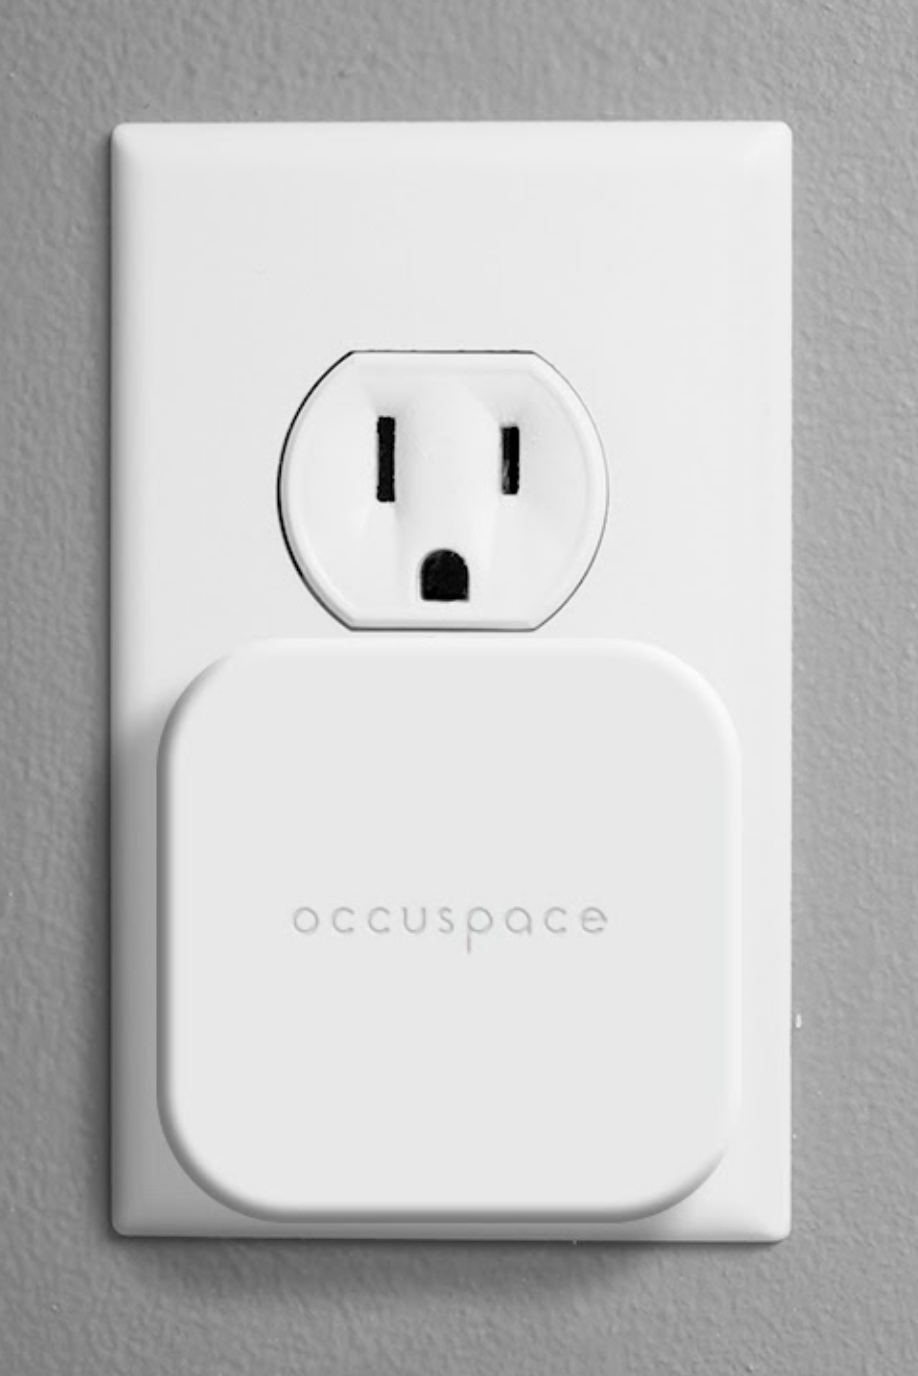 Occuspace's bluetooth and wifi sensor